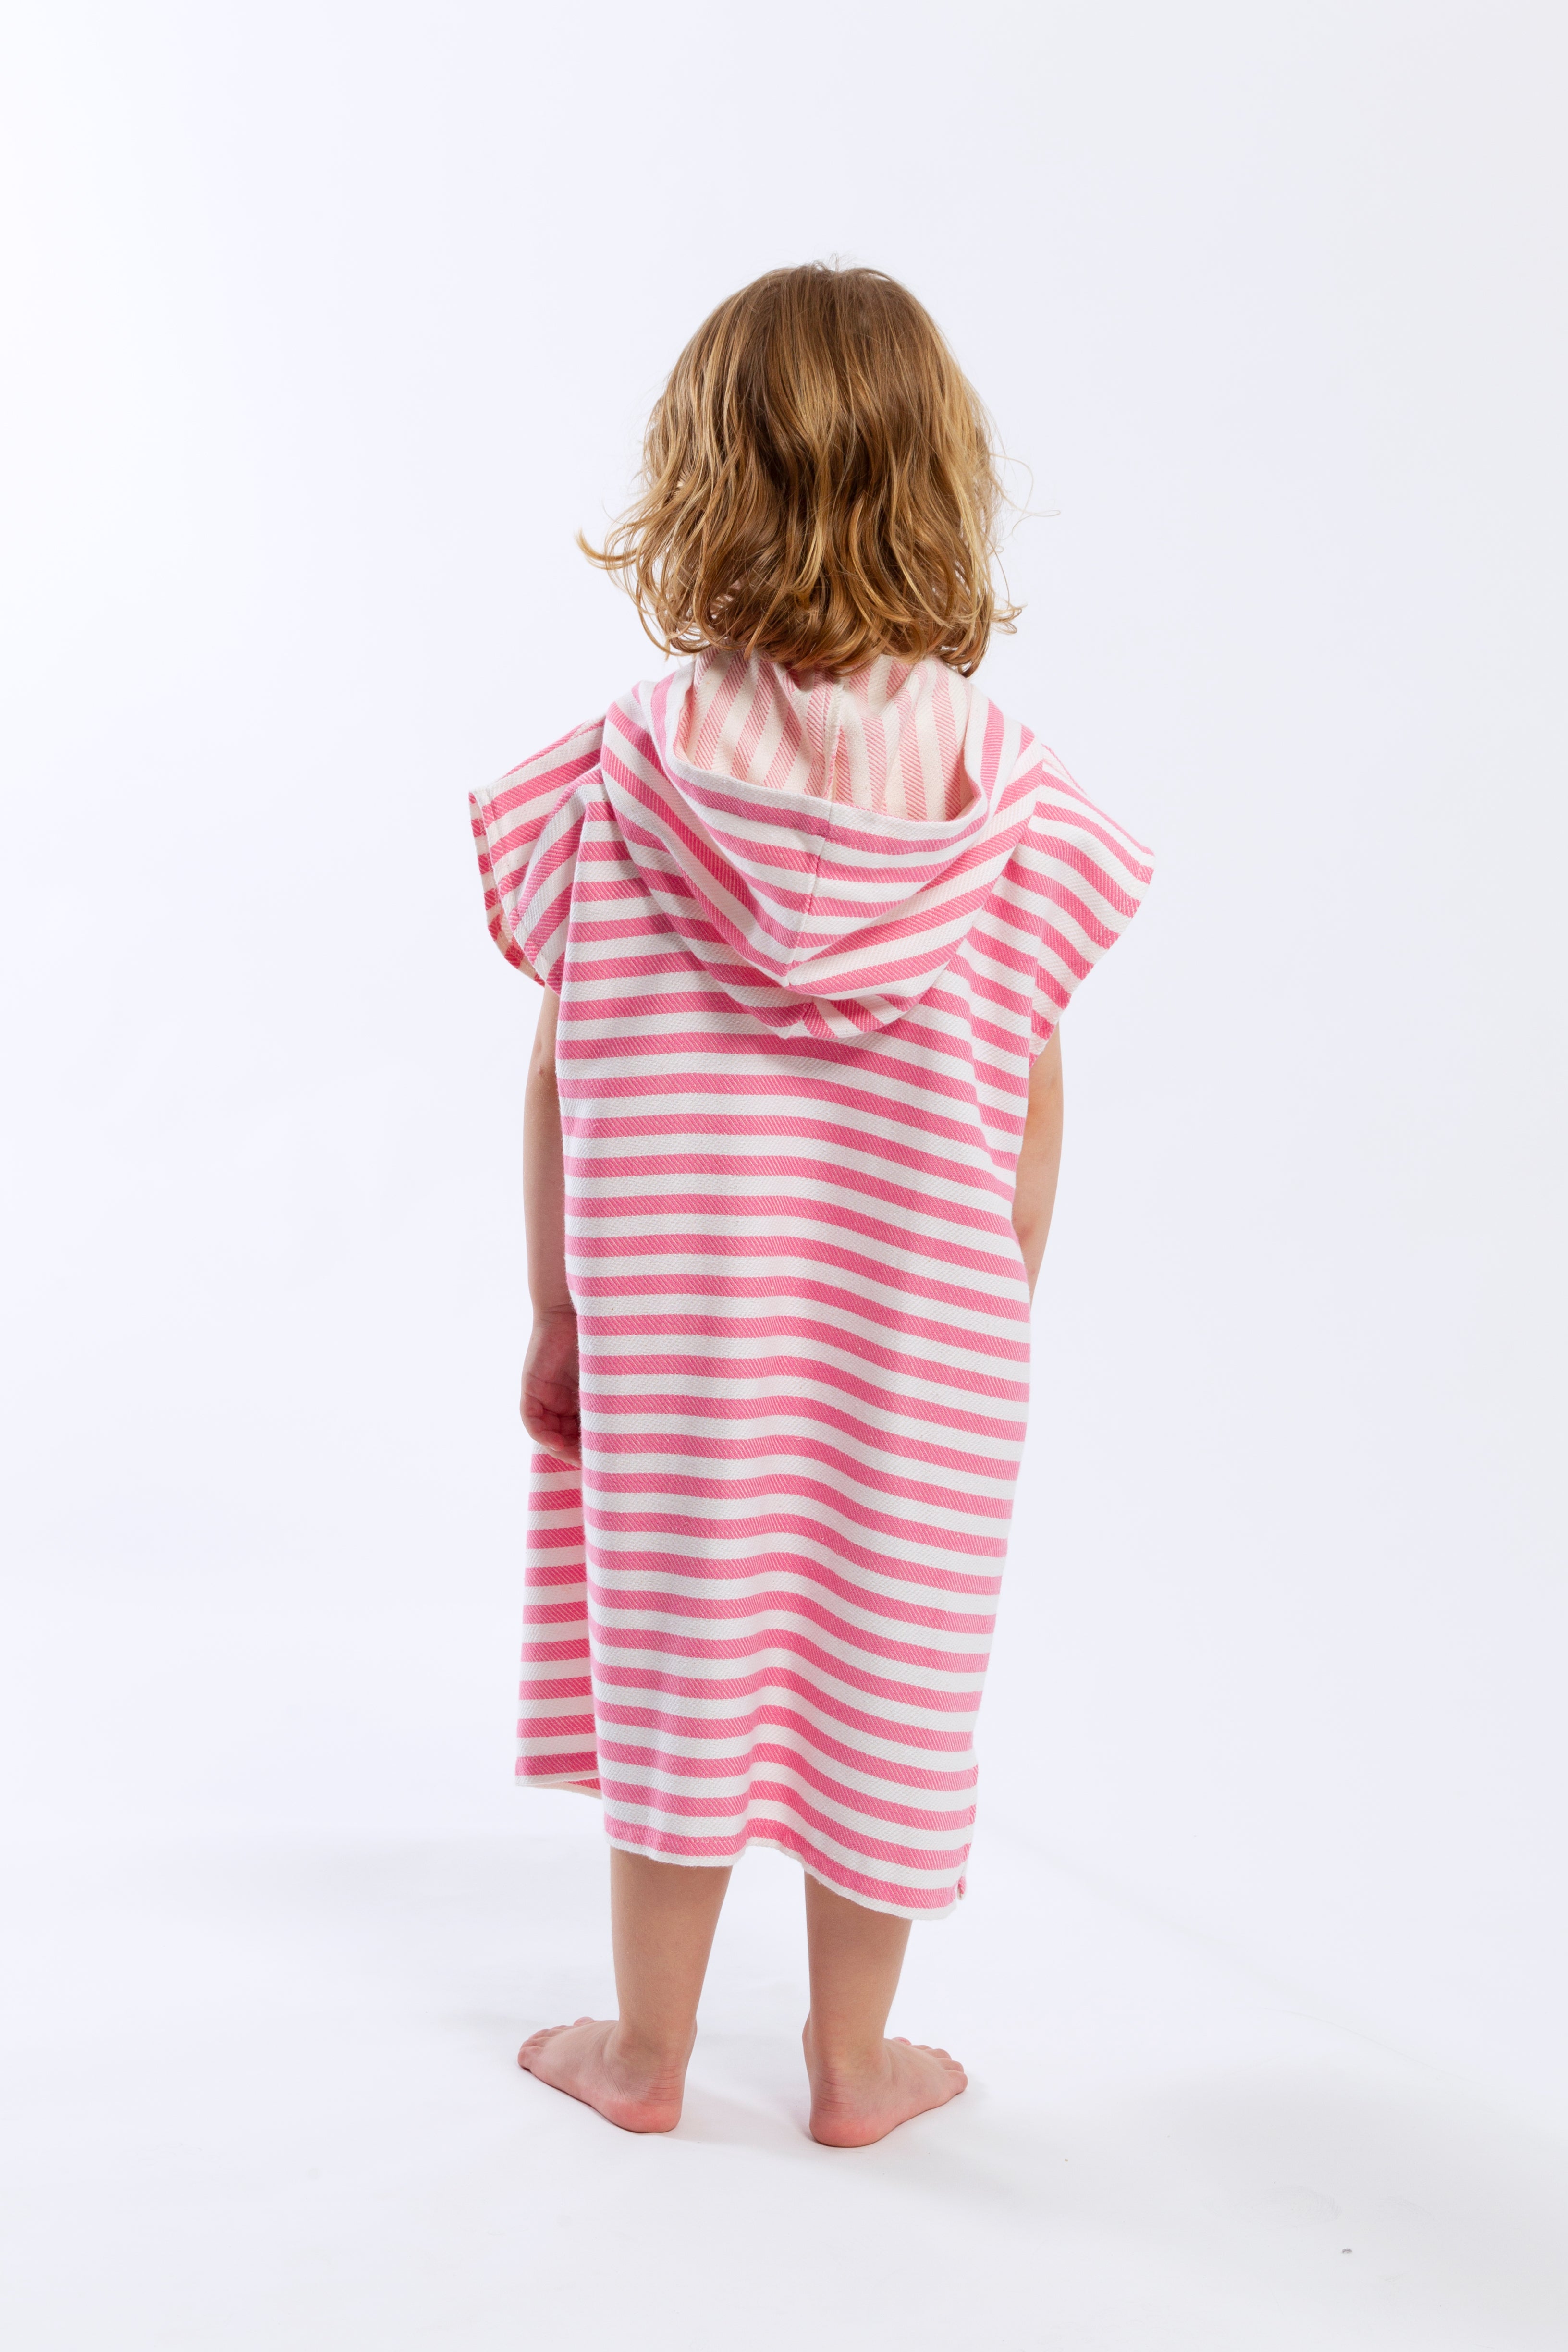 AMALFI Baby Sleeveless Hooded Towel: Hot Pink/White